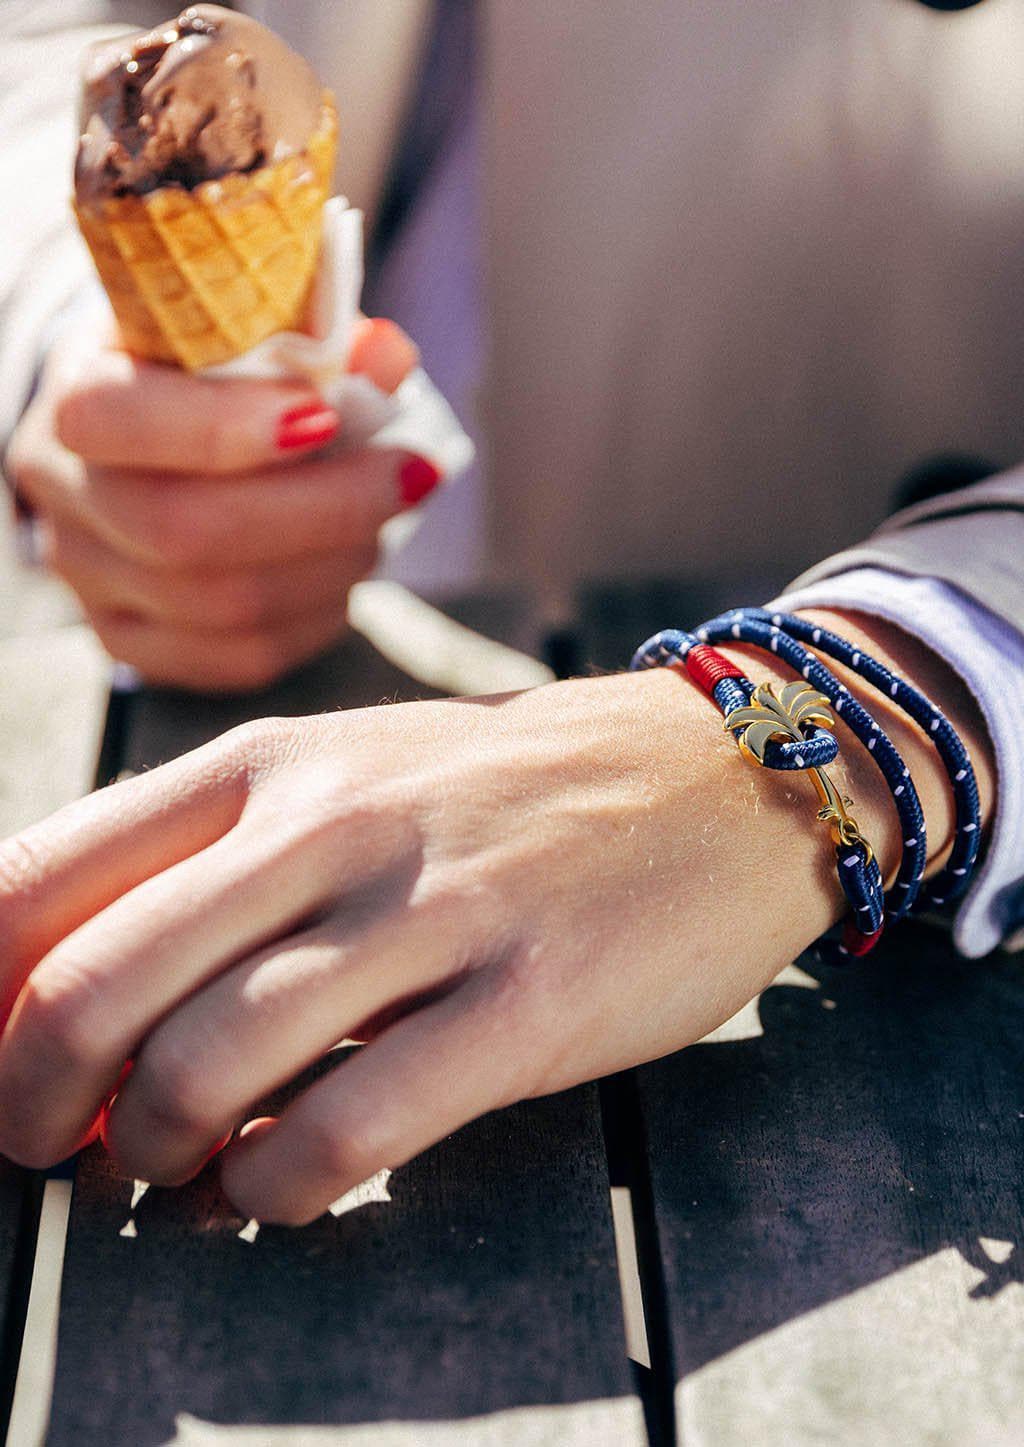 Seven Seas - Triple - Season two Palm anchor bracelet with blue and white nylon band. Female model holding ice cream.